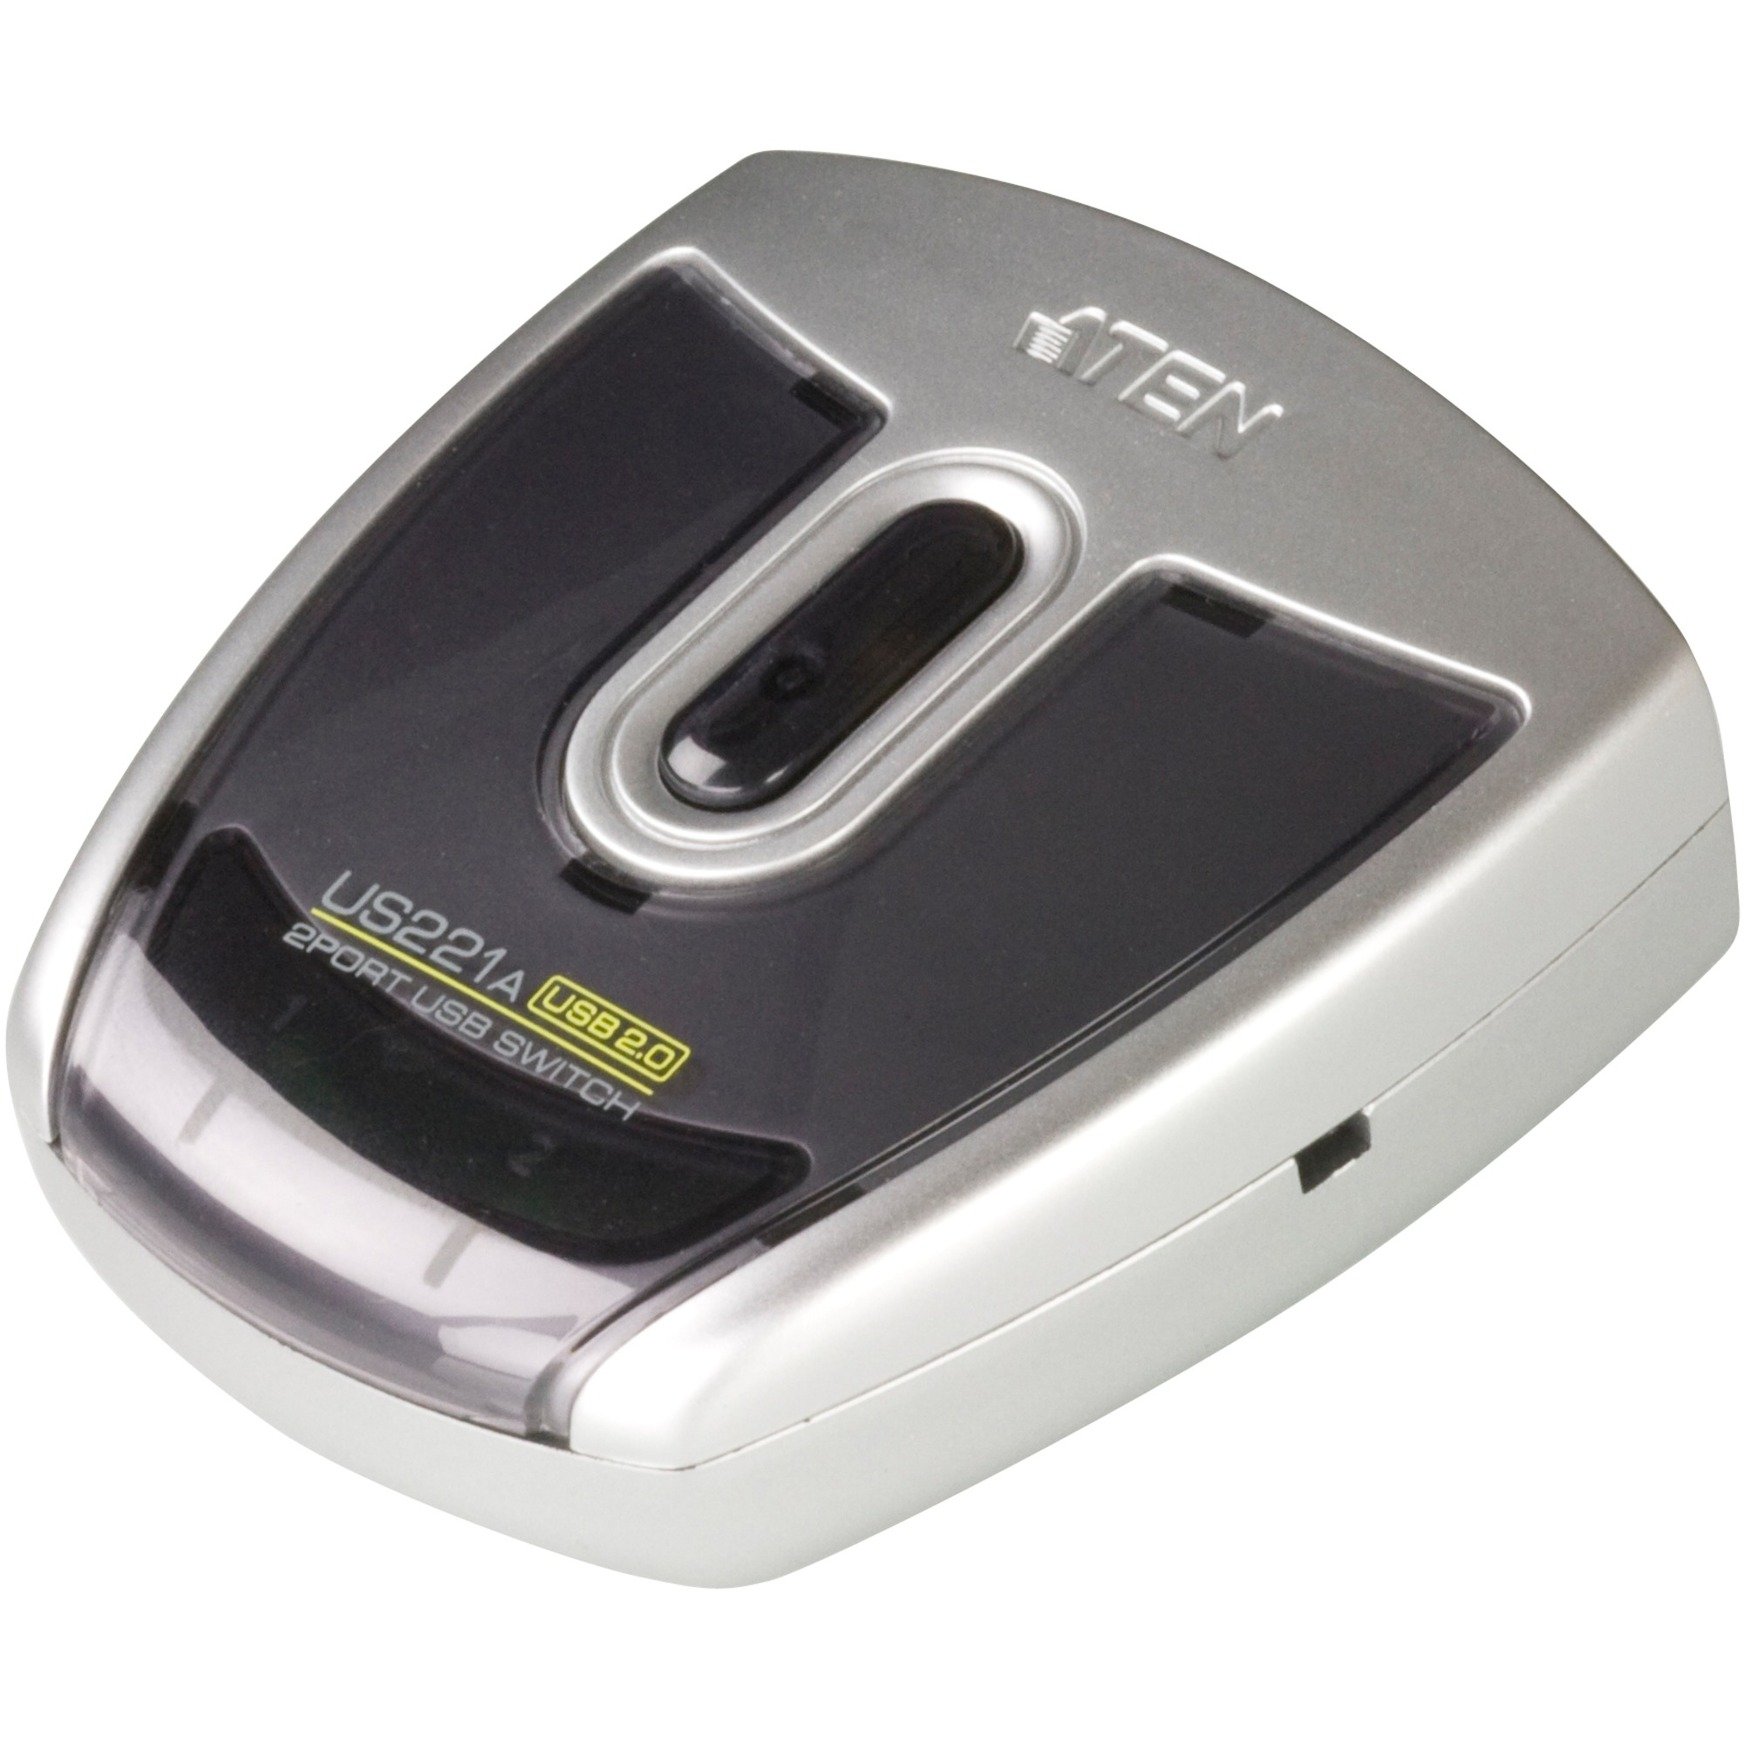 Image of Alternate - 2-Port USB 2.0 Peripheral Switch US-221A, USB-Hub online einkaufen bei Alternate